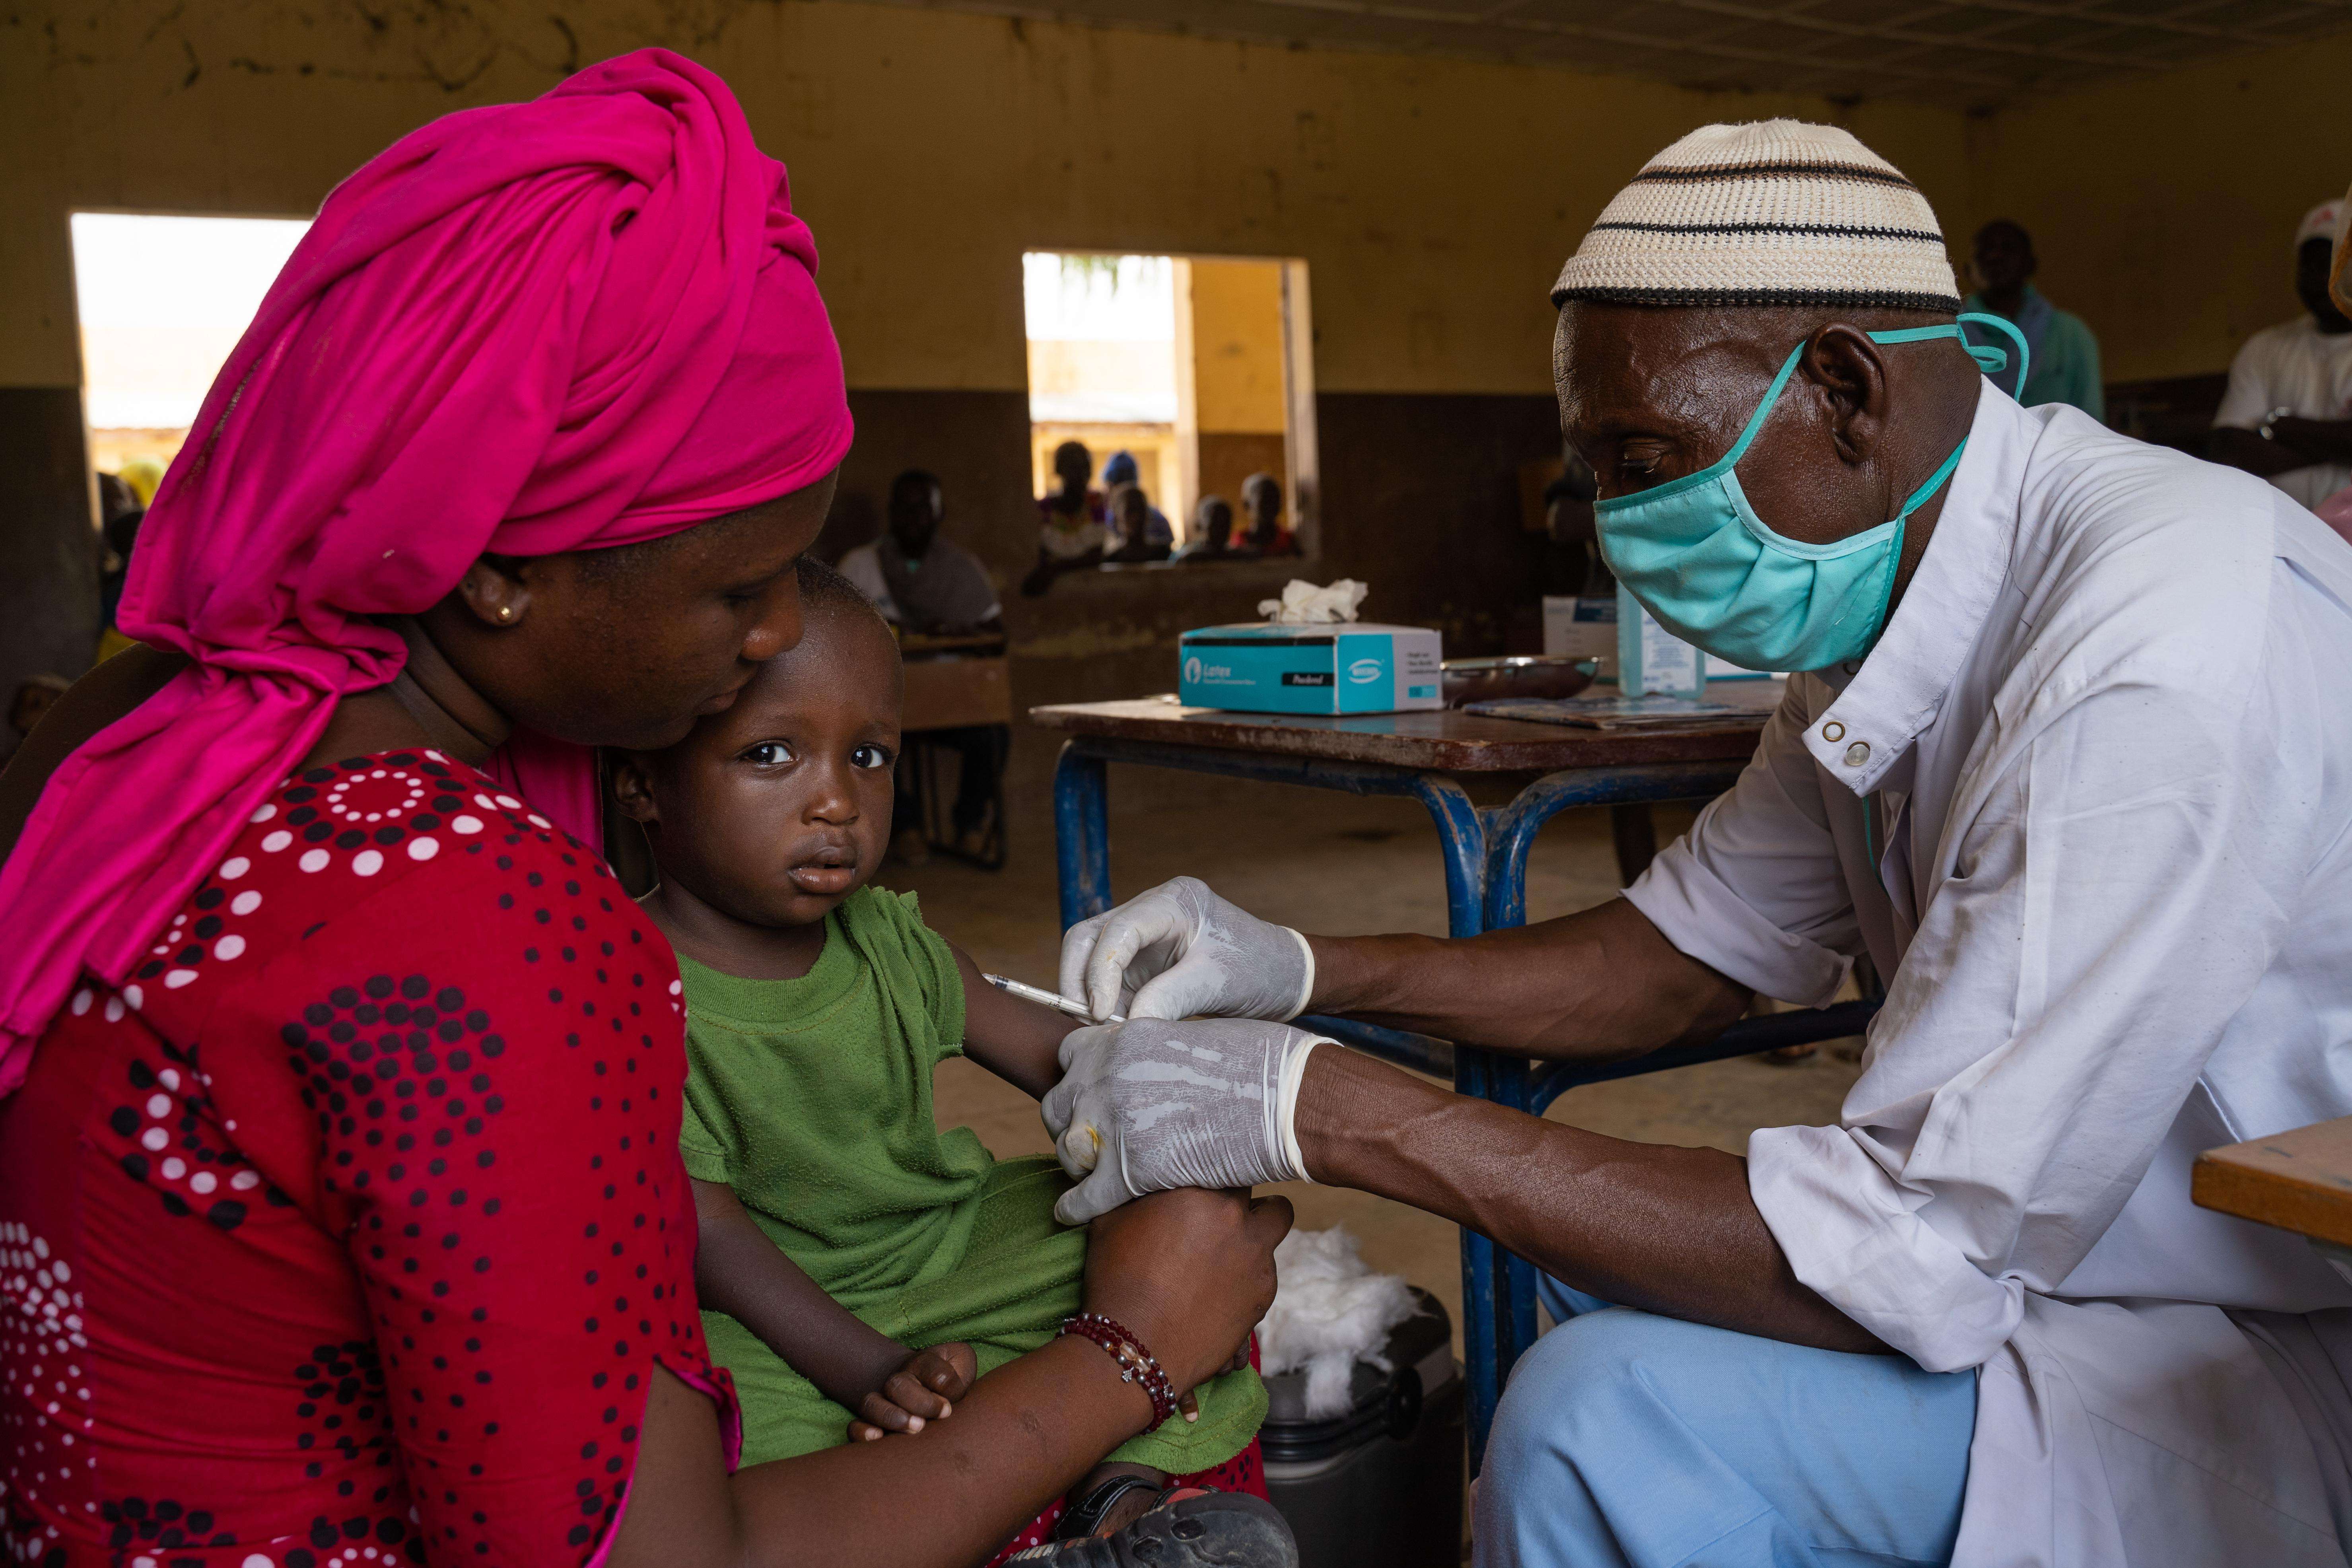 A measles vaccination campaign in Timbuktu, Mali in 2020